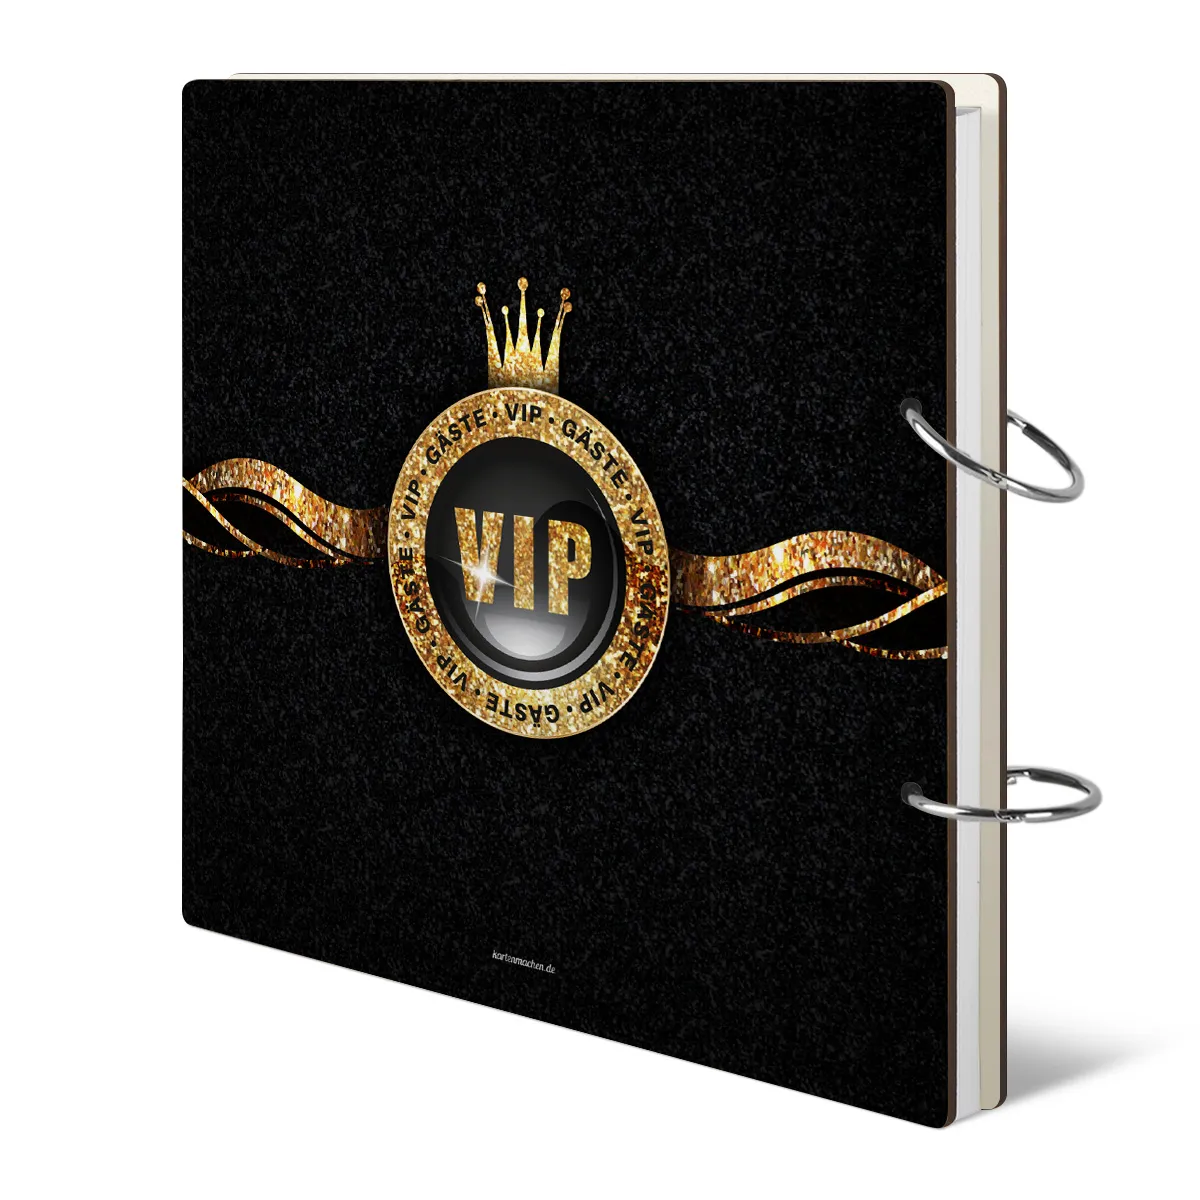 Holzcover Gästebuch - VIP Gold